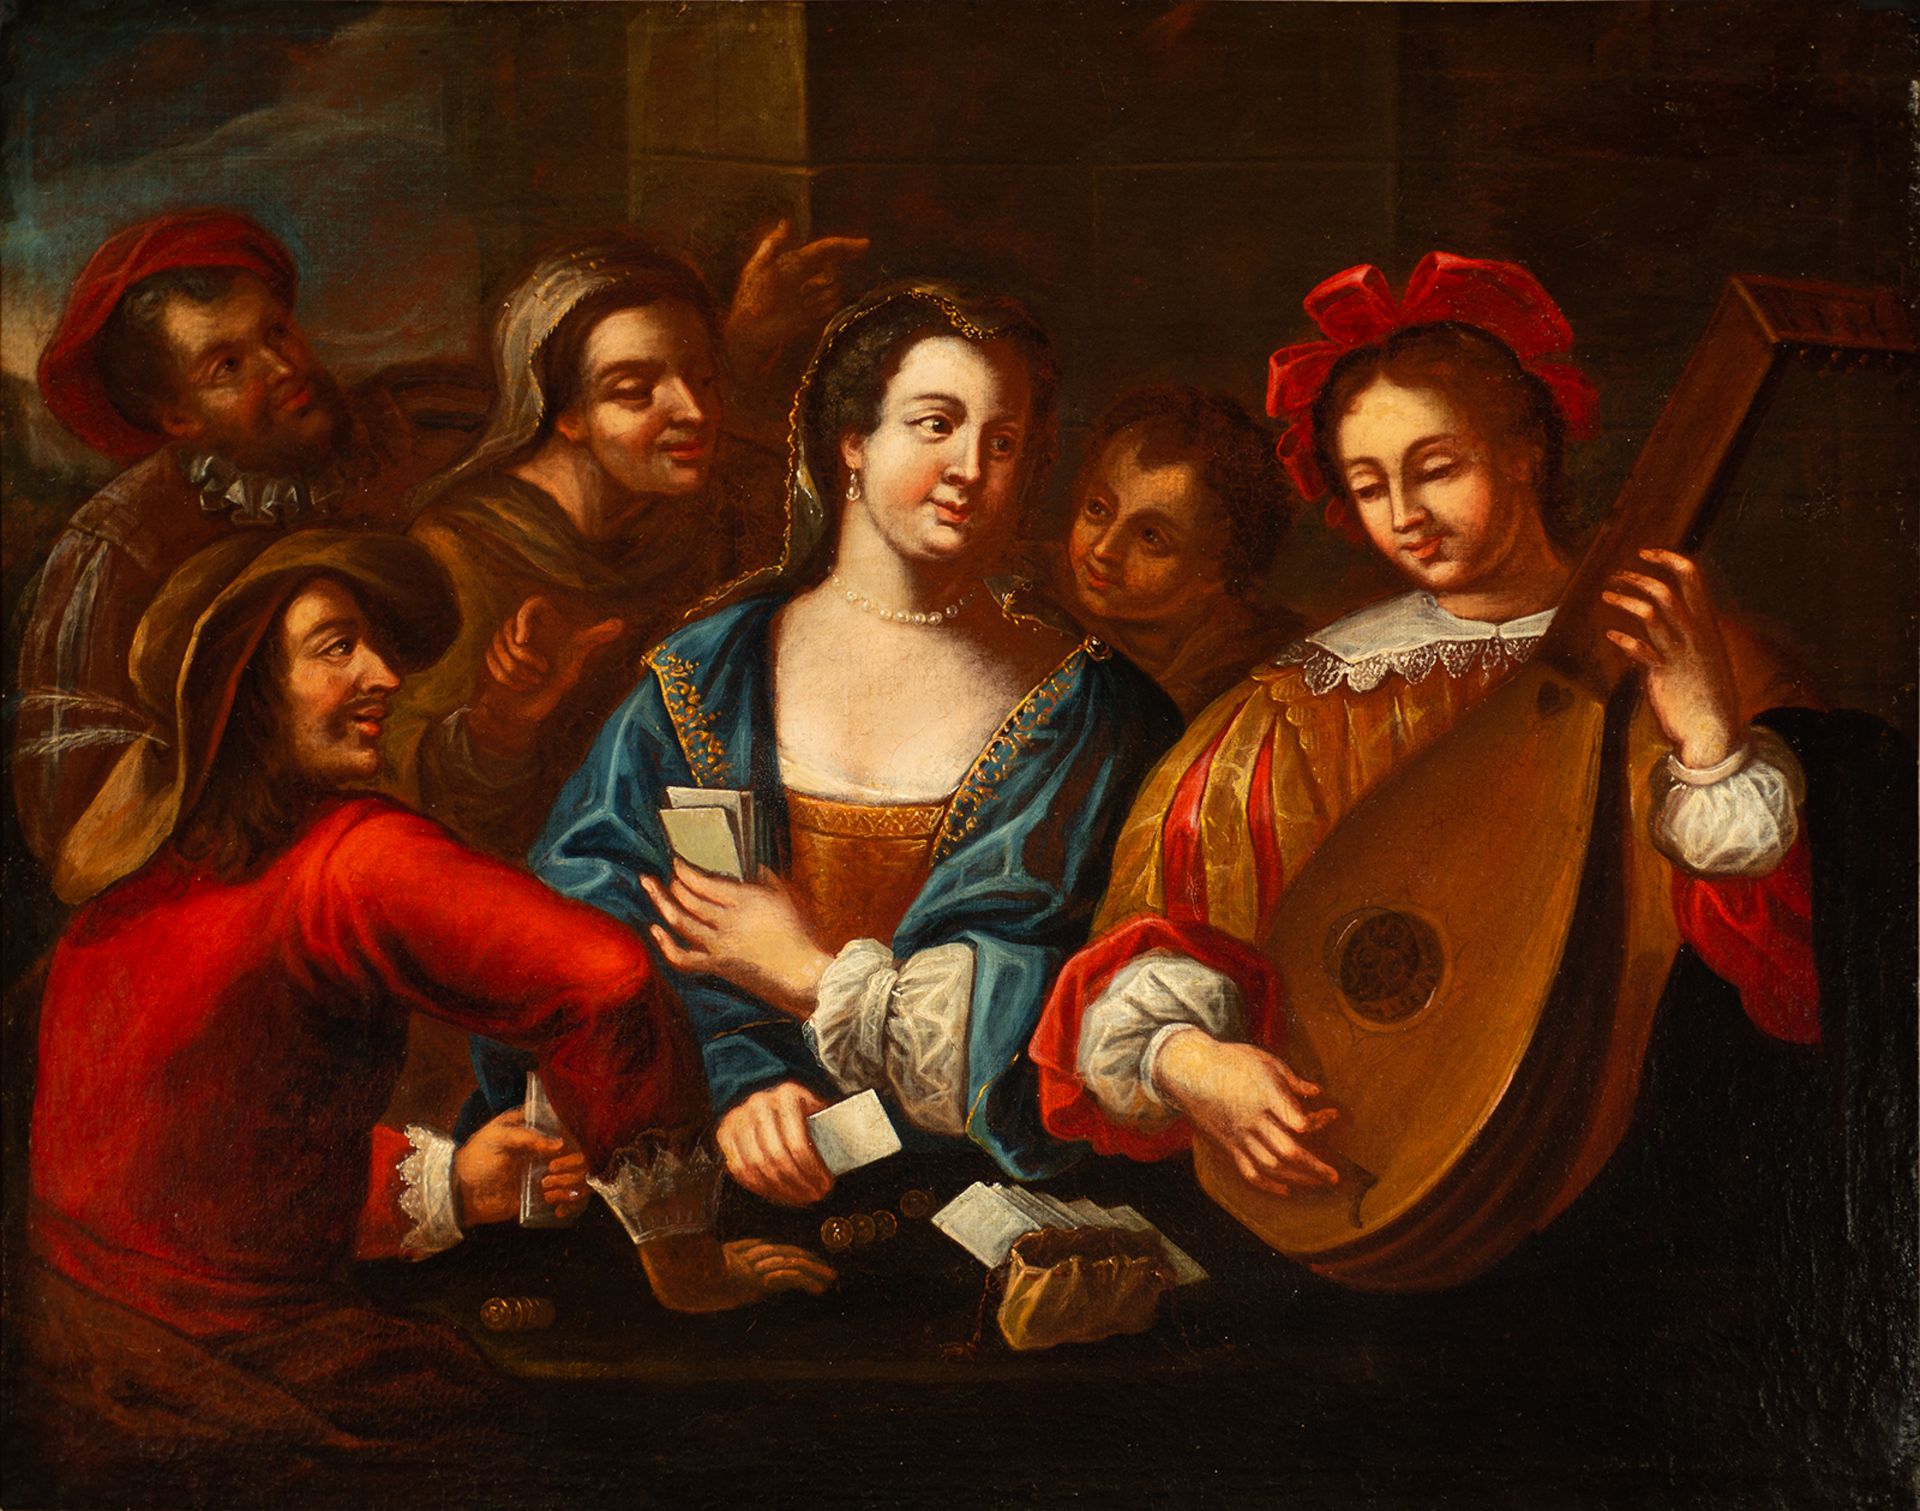 Troubadour in the tavern, 17th century